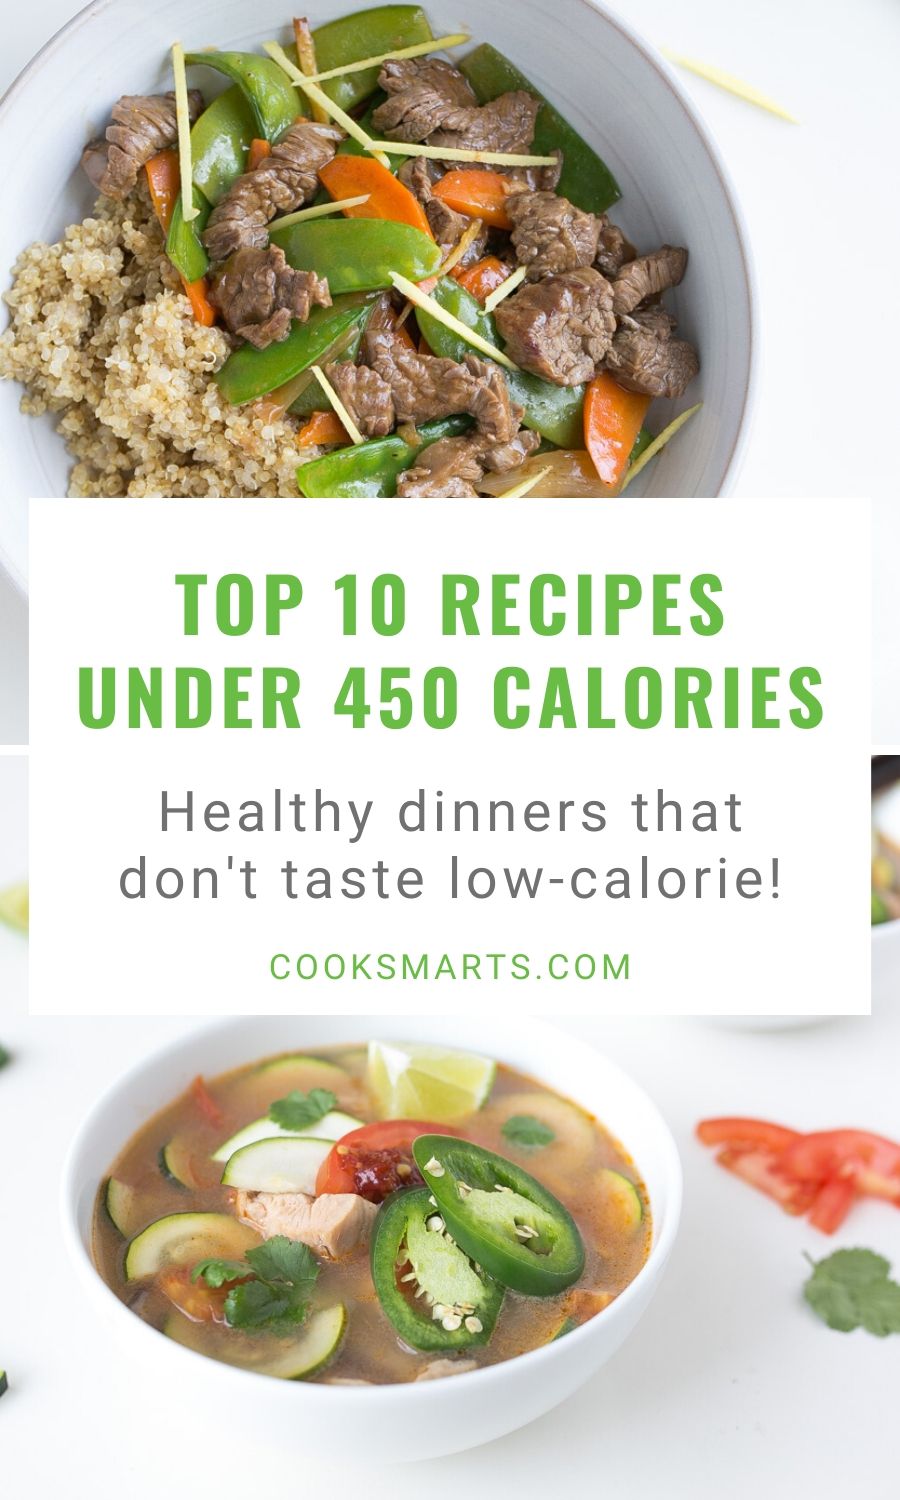 Top 10 Healthy Recipes Under 450 Calories | Cook Smarts